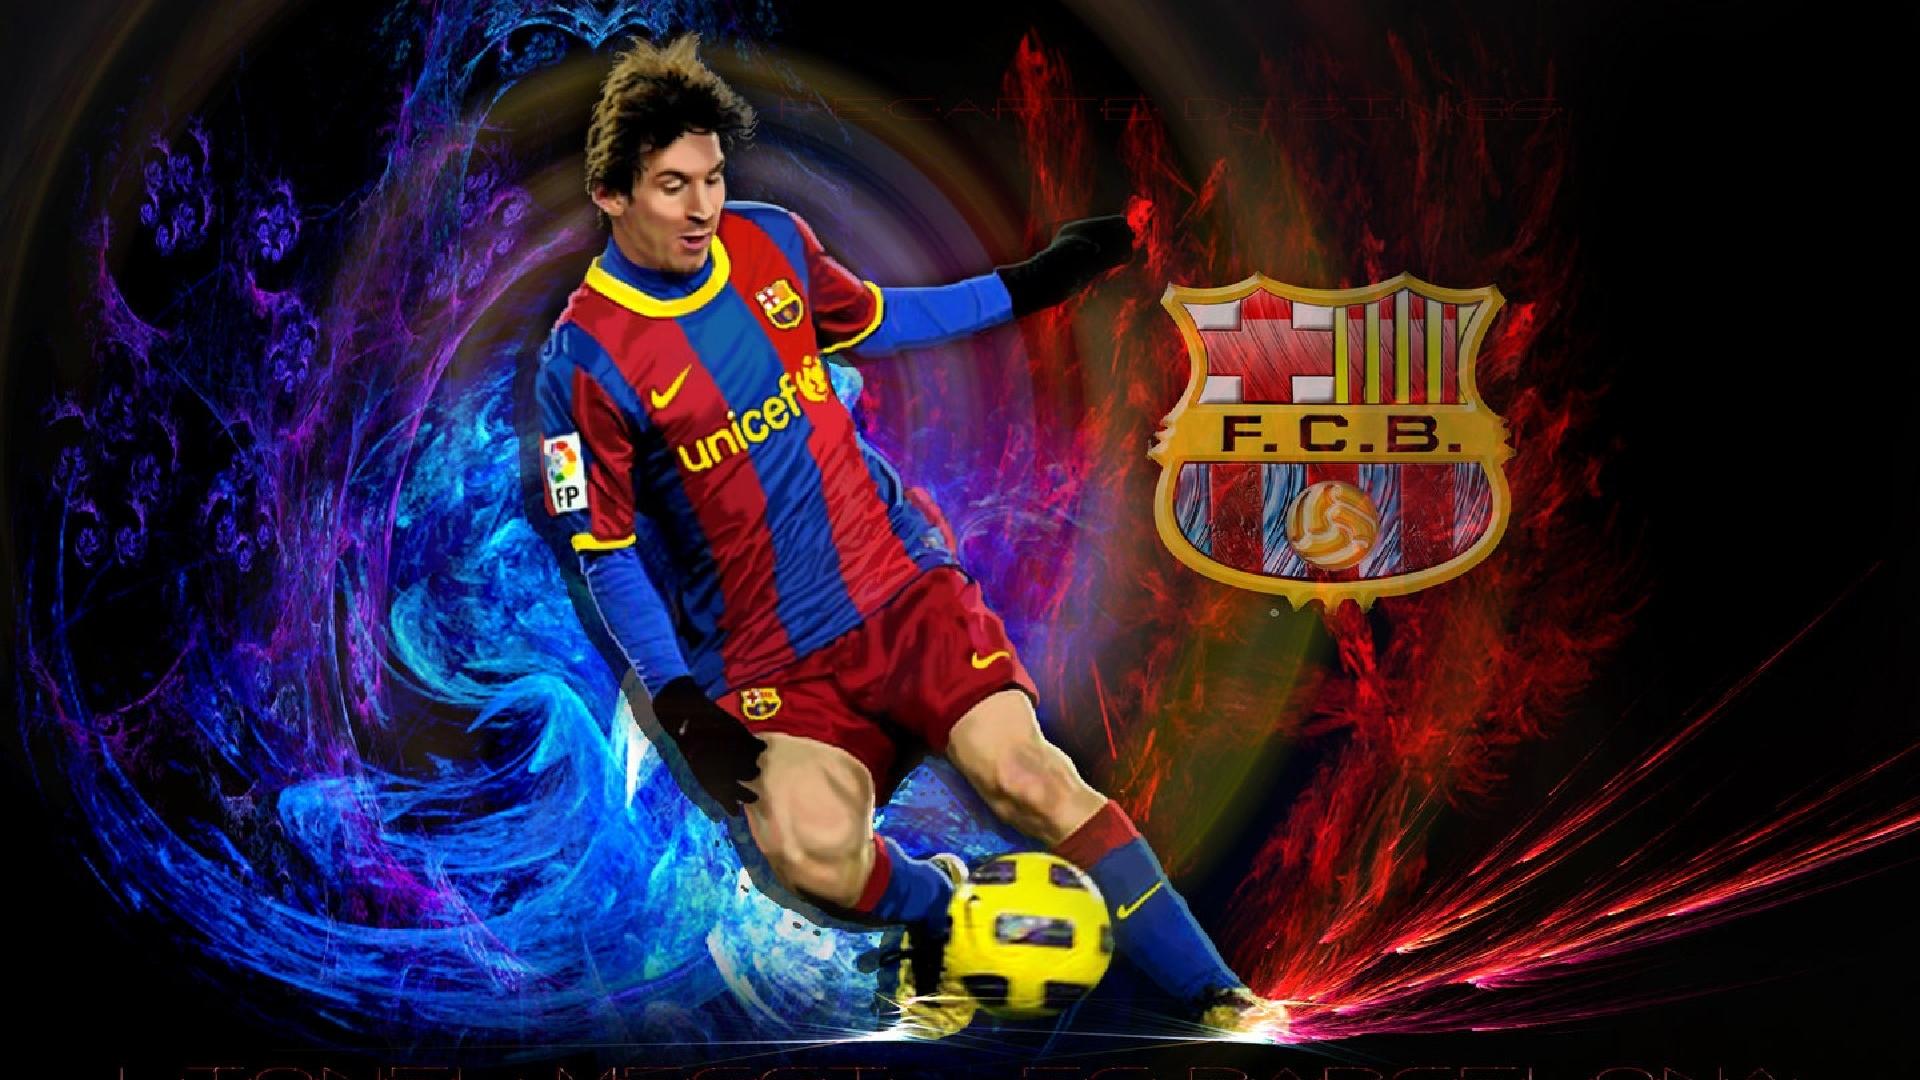 Messi Sport Club Barcelona Full HD Desktop Wallpapers 1080p 1920x1080